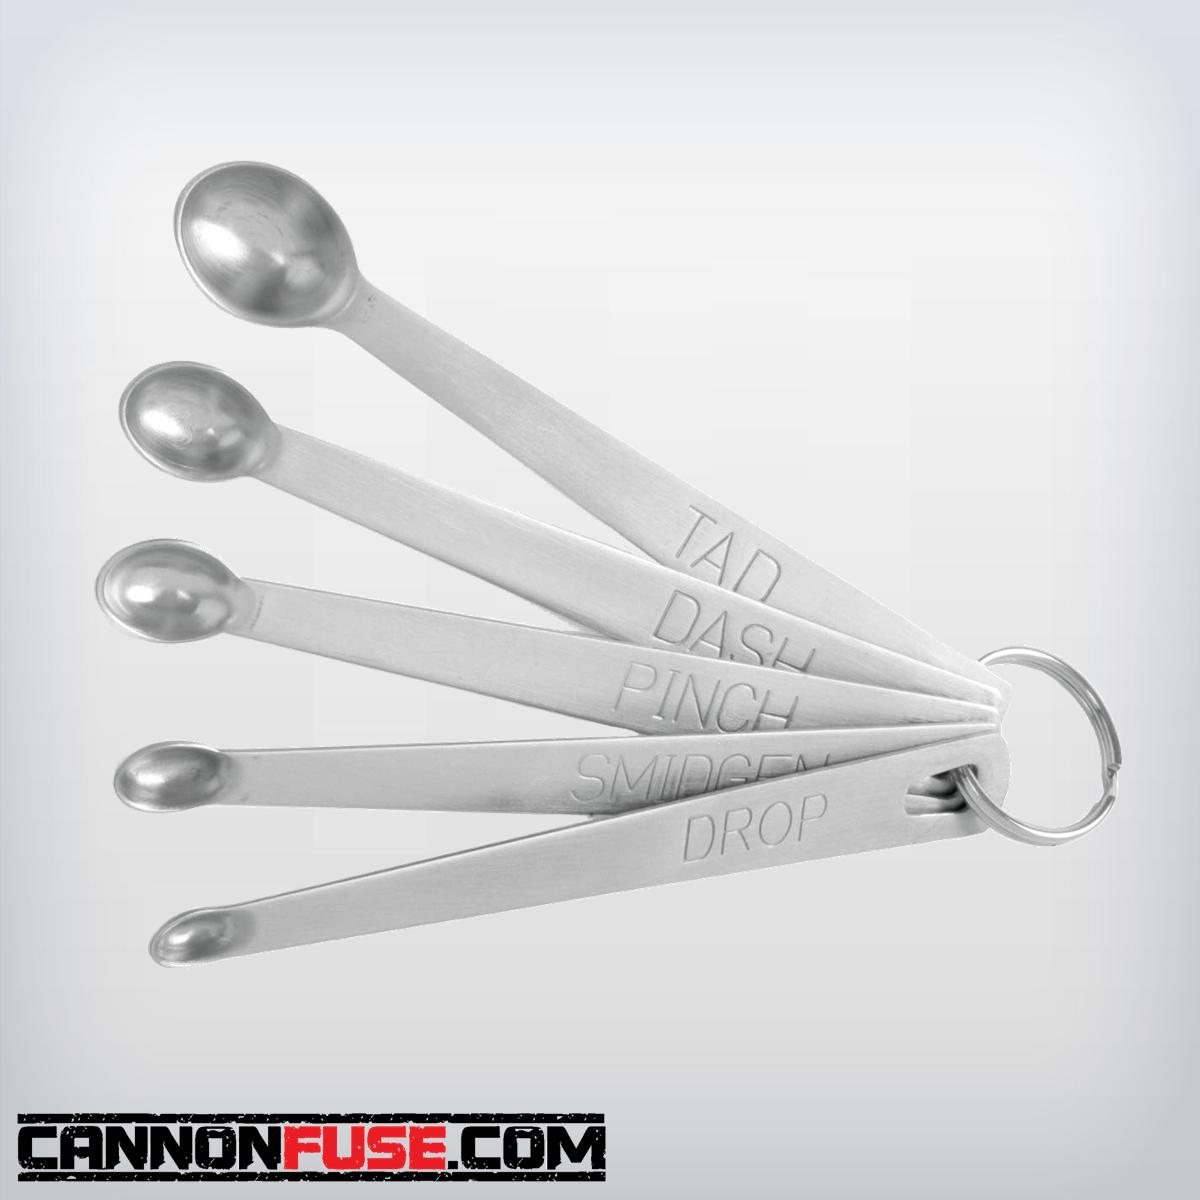 4-Piece Mini Measuring Spoons Tad Dash Pinch Smidgen